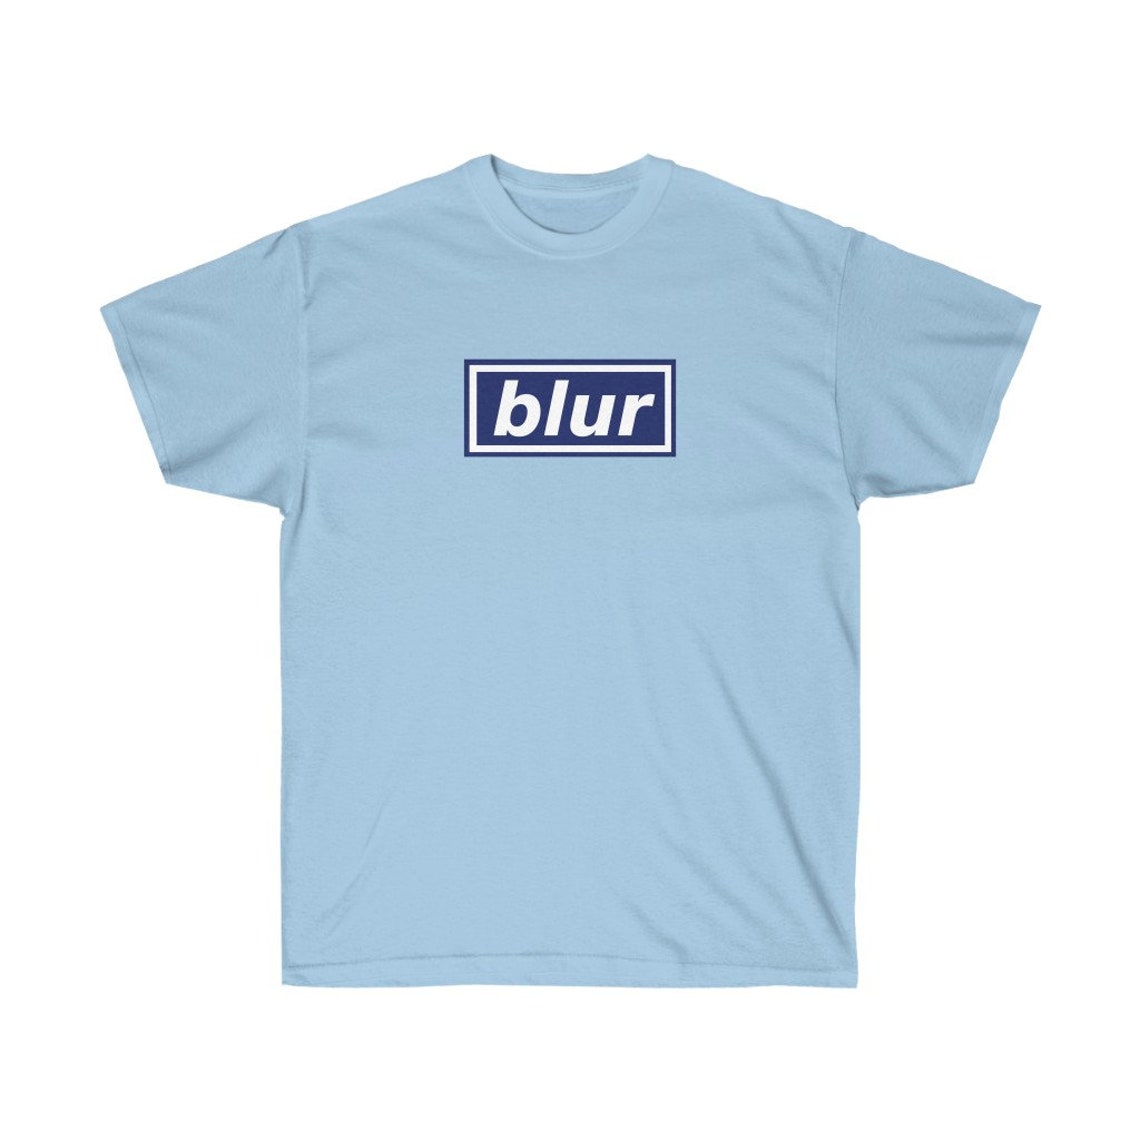 Blur T-Shirt | Etsy